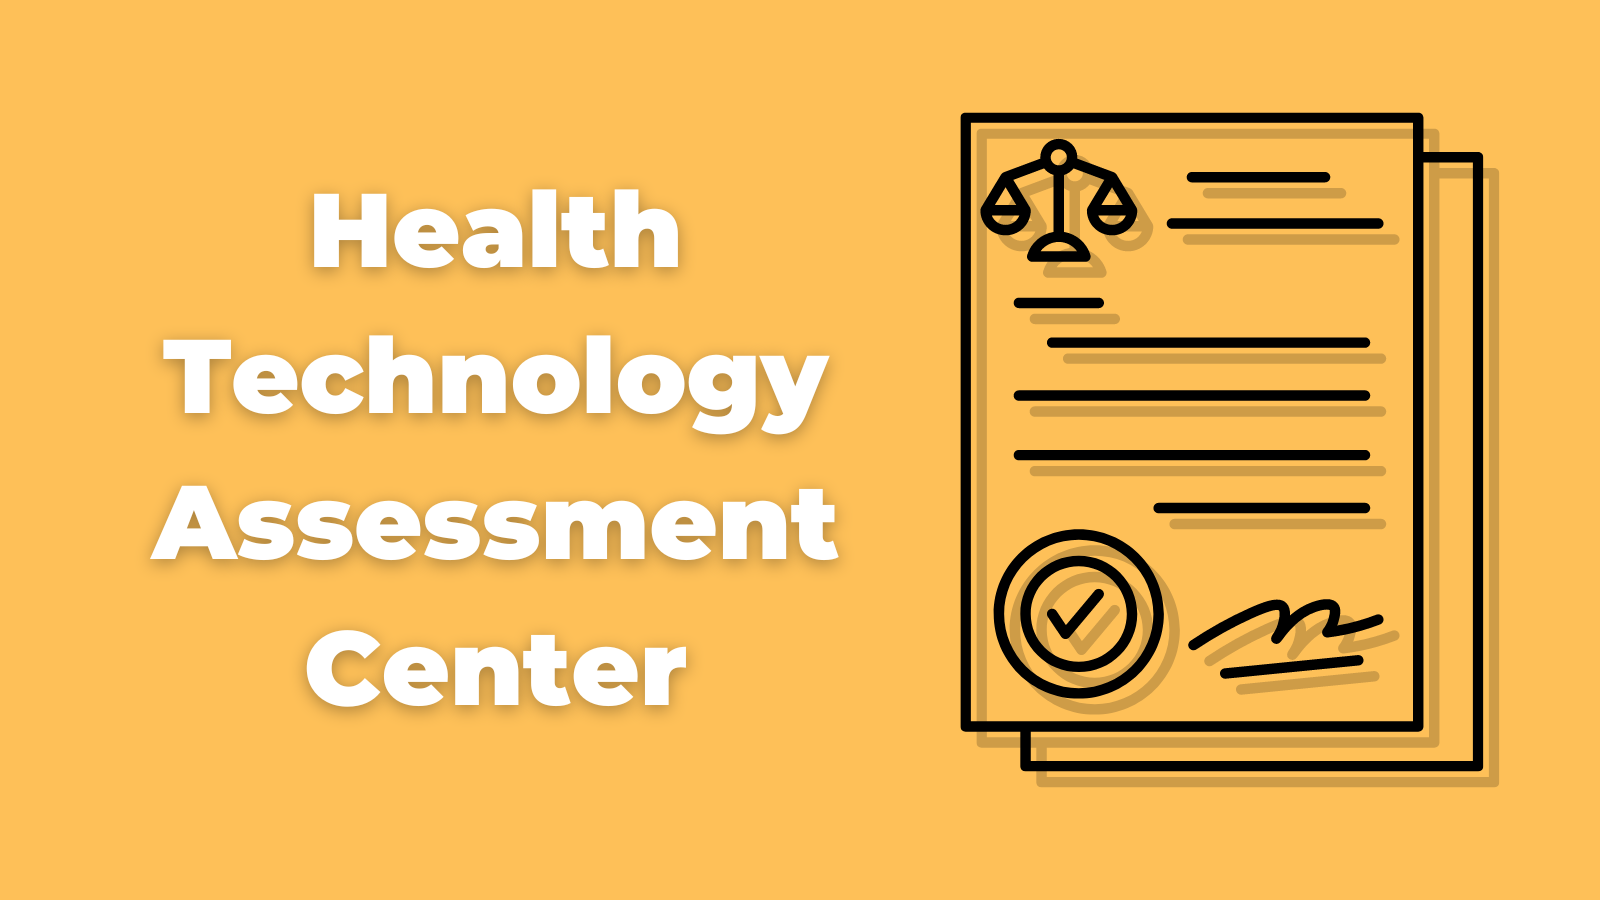 Health Technology Assessment Center